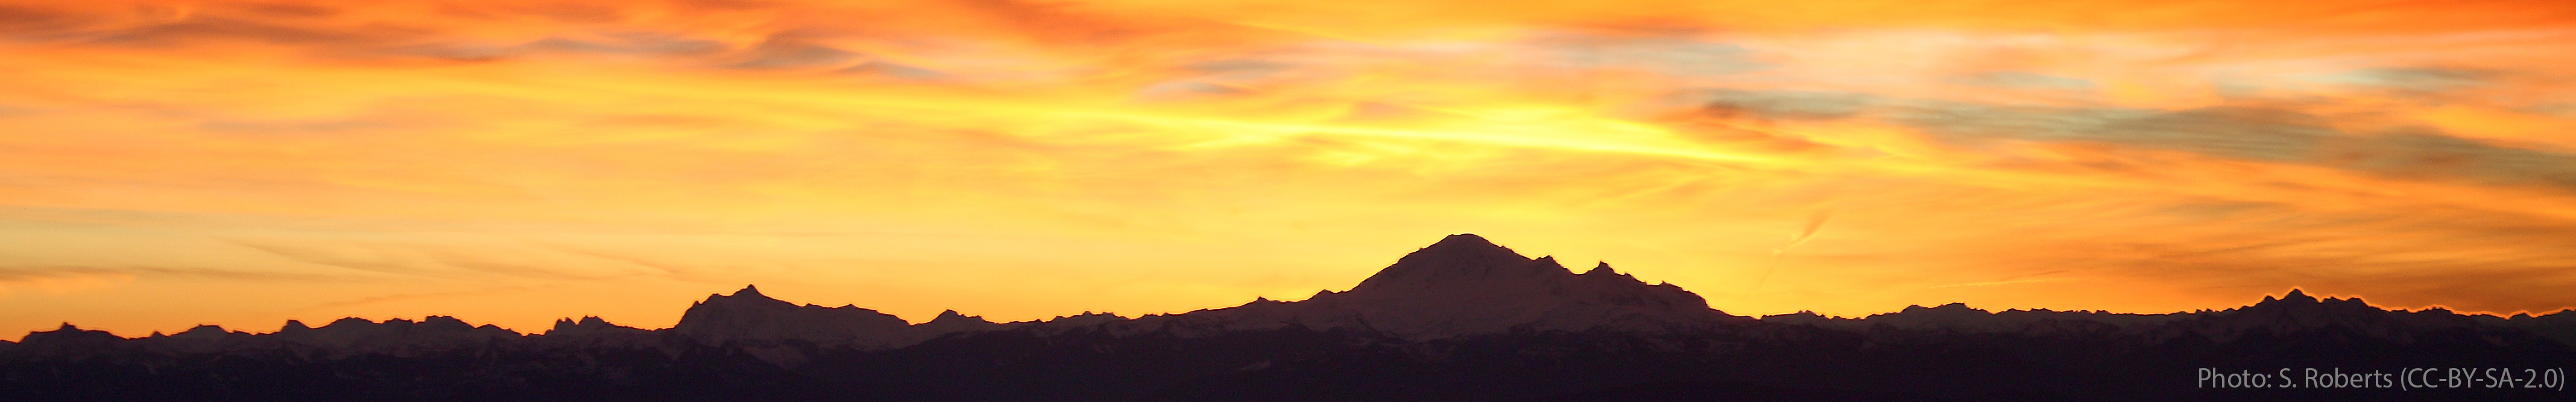 sunset over a mountain range